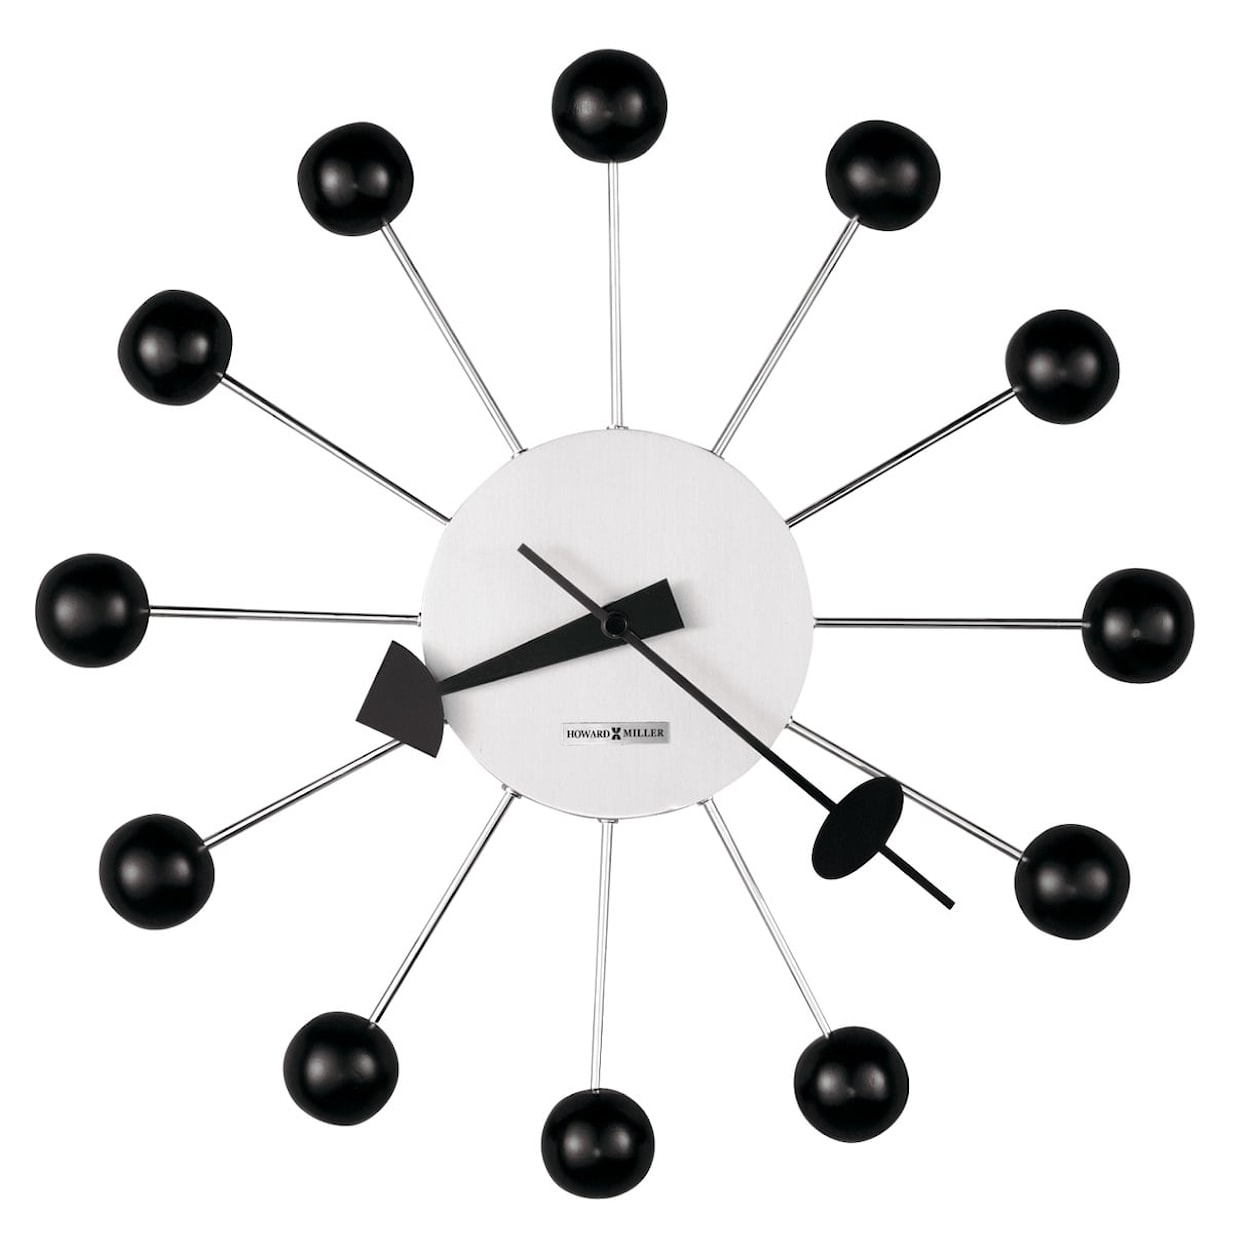 Howard Miller Howard Miller Ball Wall Clock